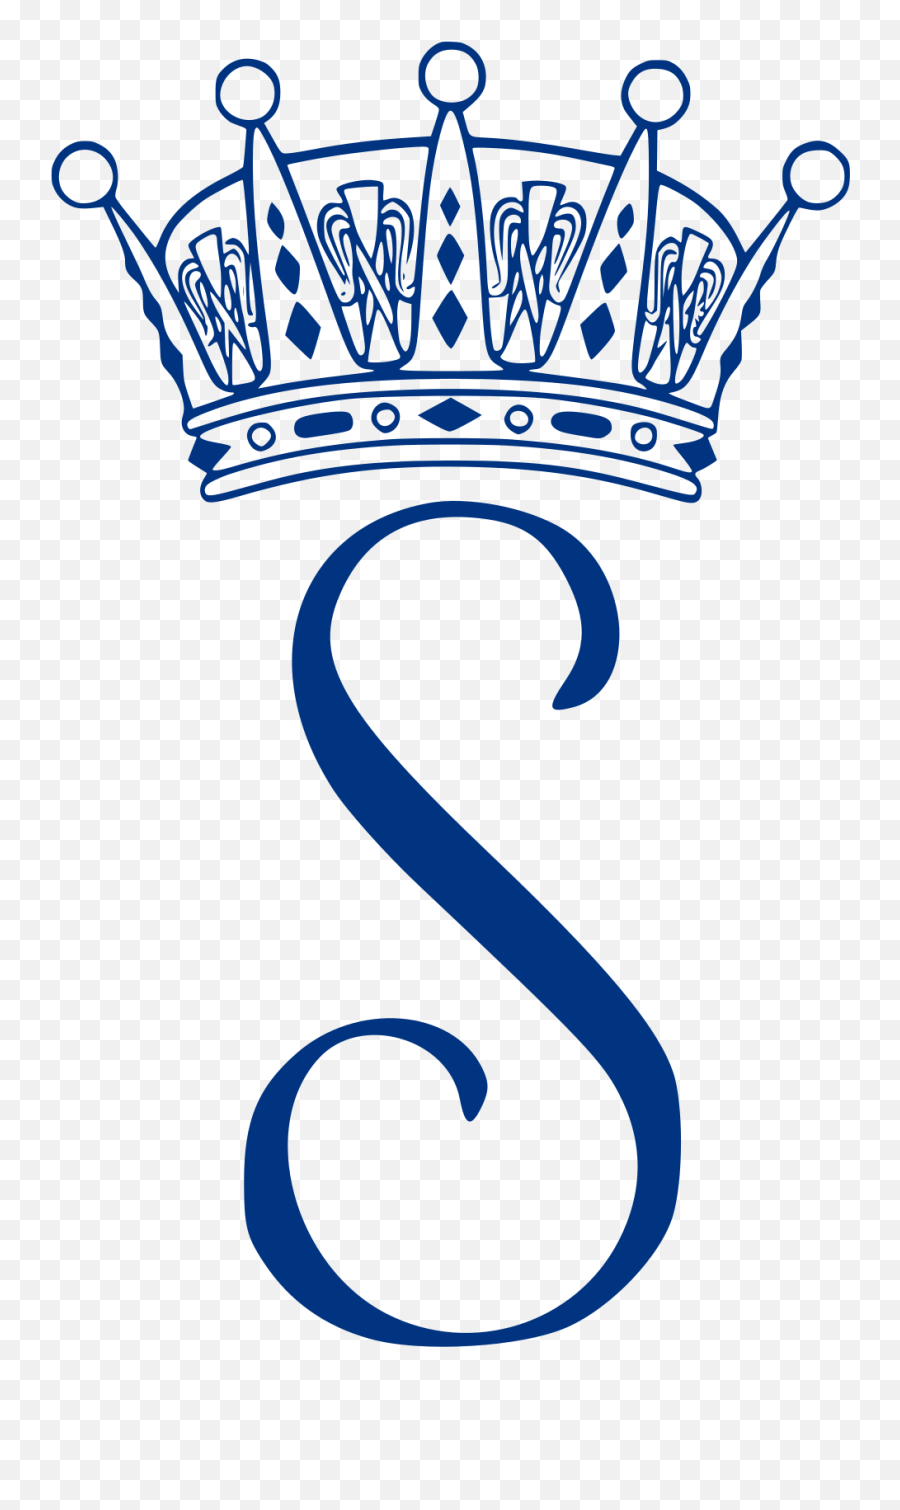 Fileprincess Sofiau0027s Monogramsvg - Wikimedia Commons Monogram Estelle Of Sweden Png,Princess Sofia Png